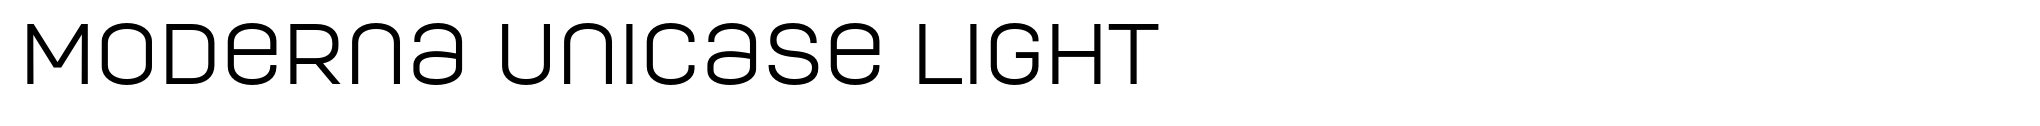 Moderna Unicase Light image